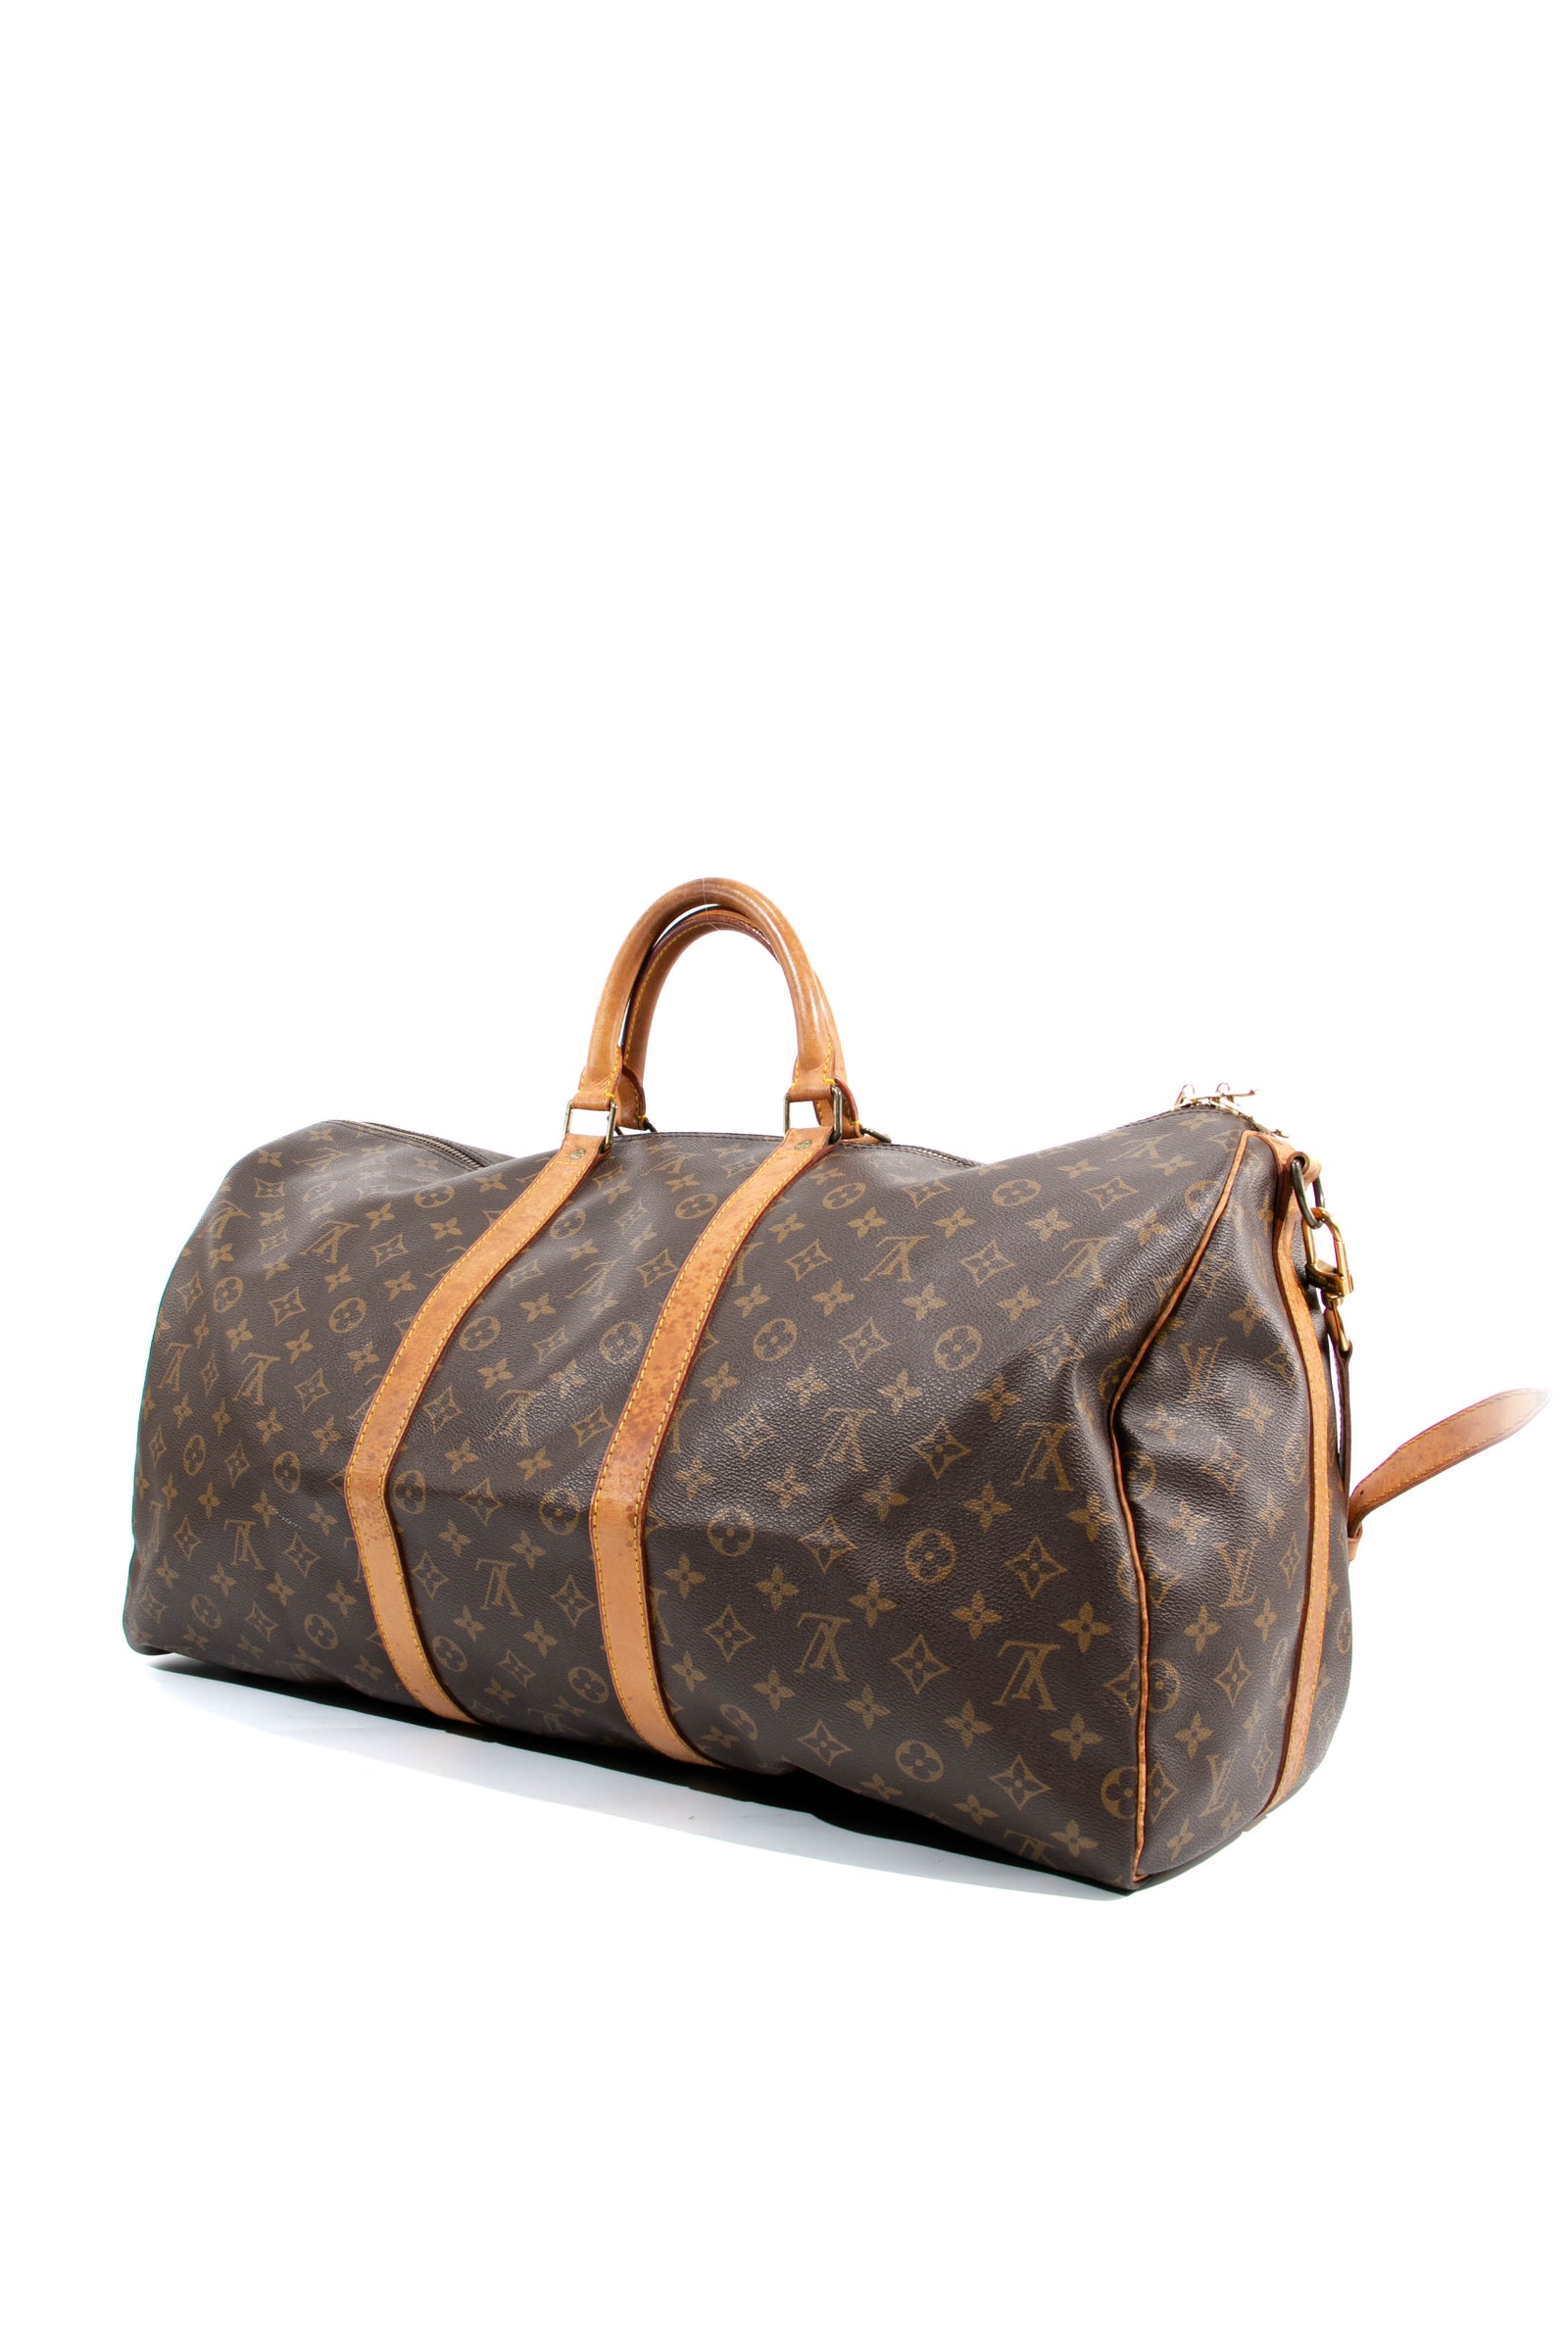 Vuitton - Buy next Louis Vuitton Bag at Collector's – Collectors cage